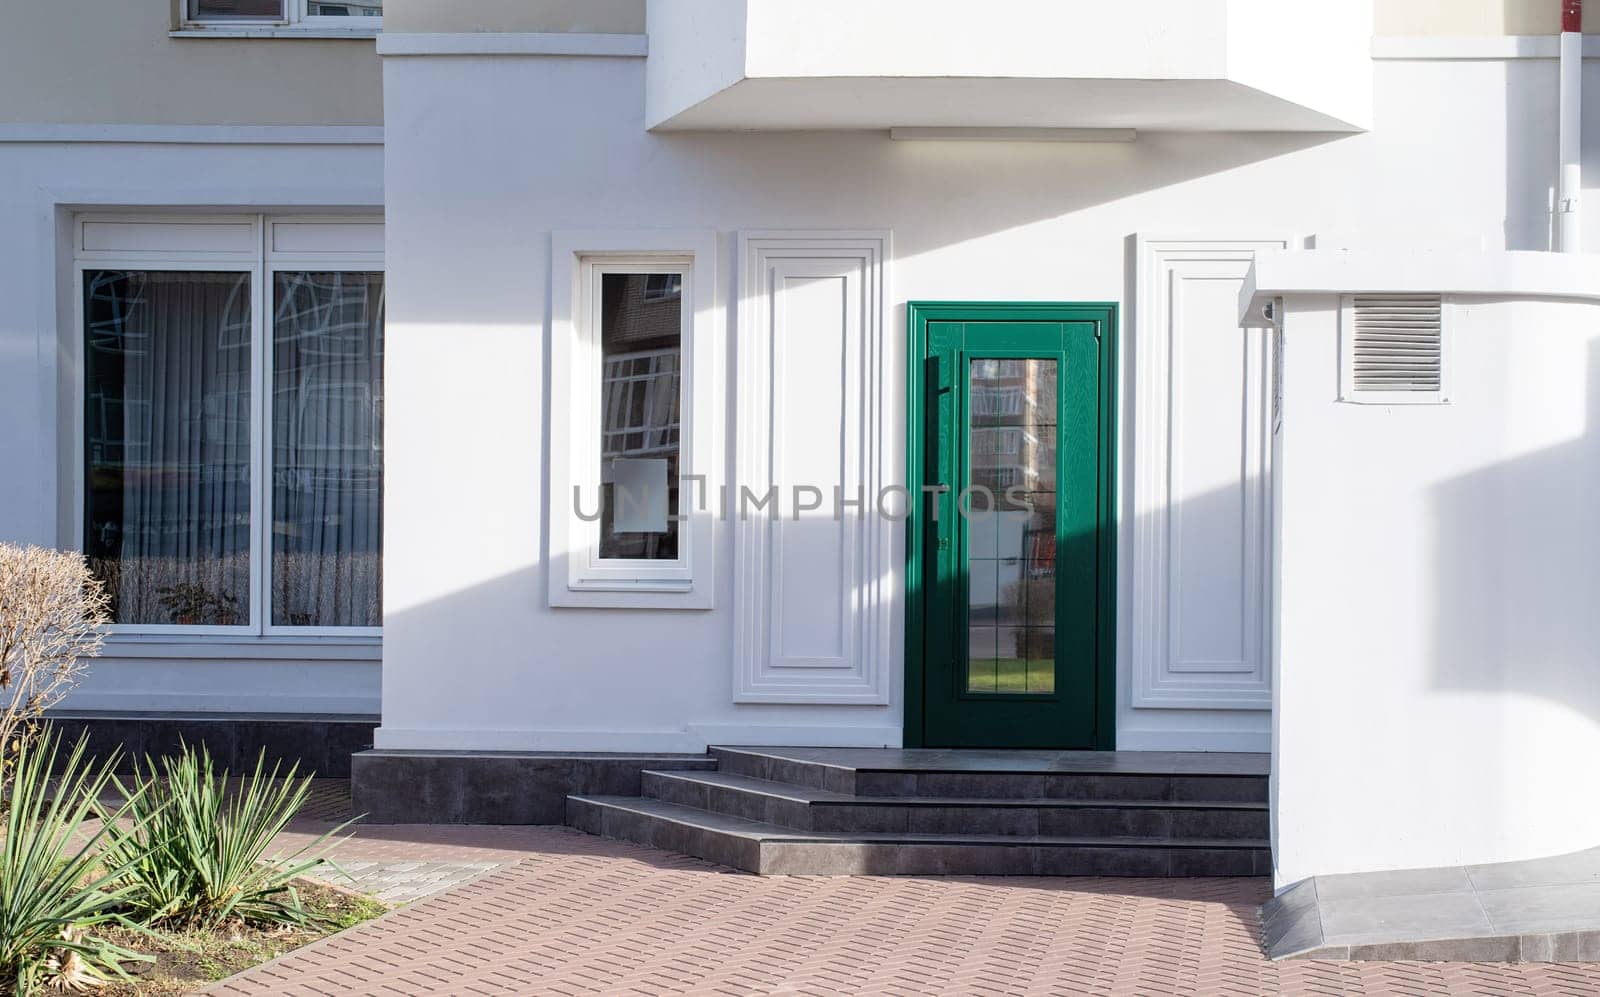 establishment exterior with white walls and green door, mockup design by Desperada